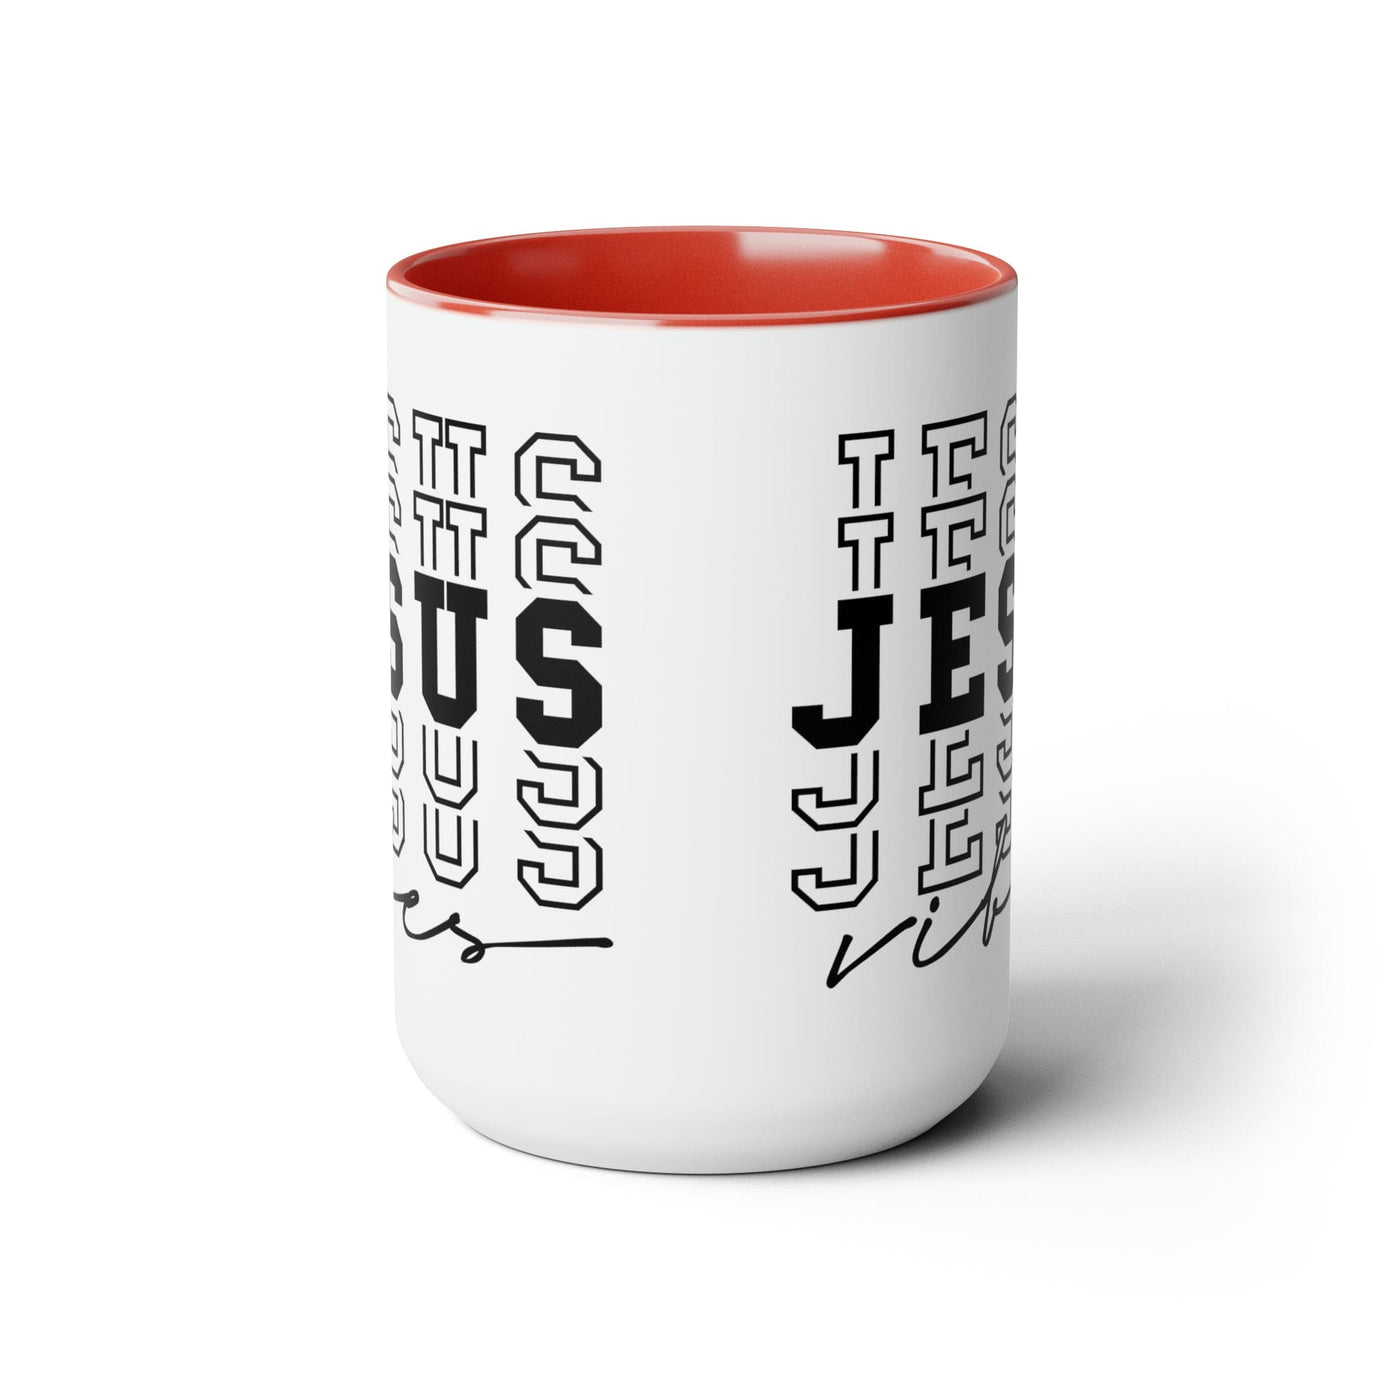 Accent Ceramic Coffee Mug 15oz - Jesus Vibes - Mug